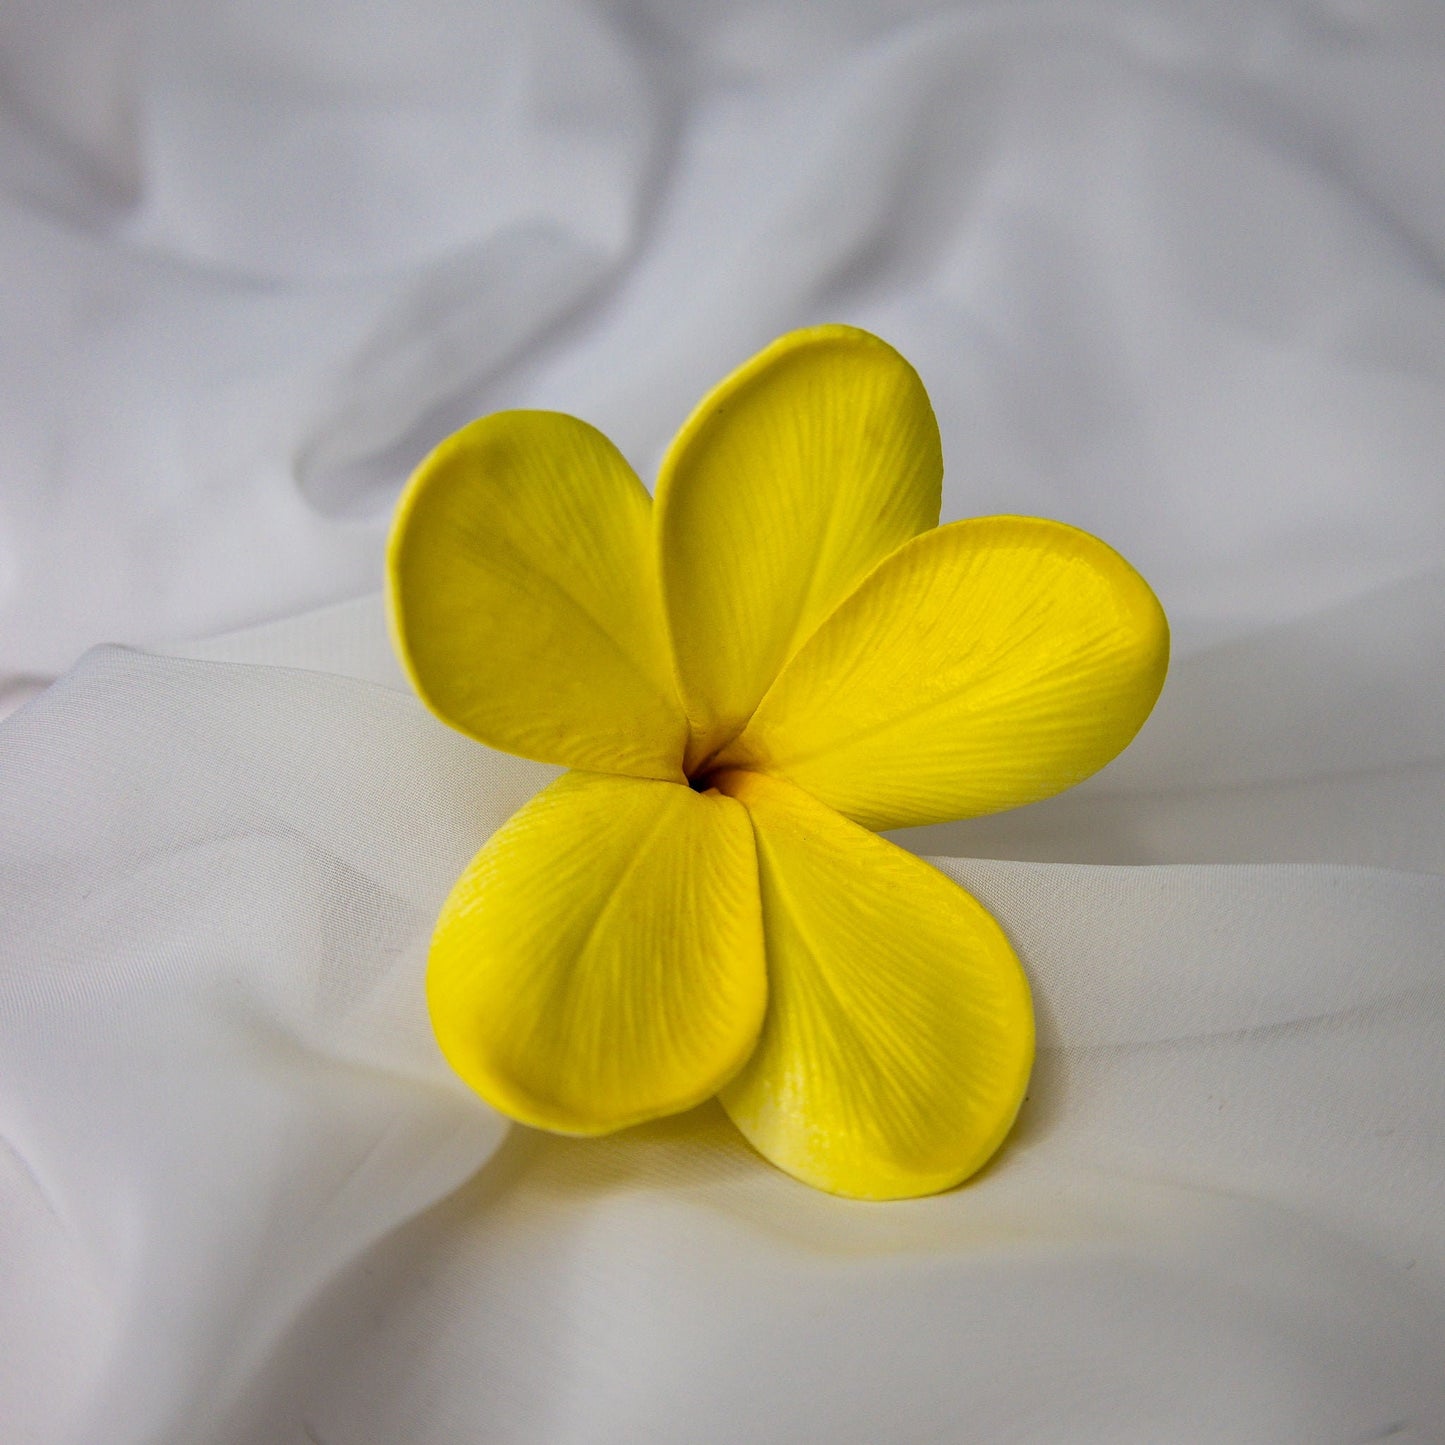 Sunburst Frangipani Flowerhead - Realistic Artificial Flowers